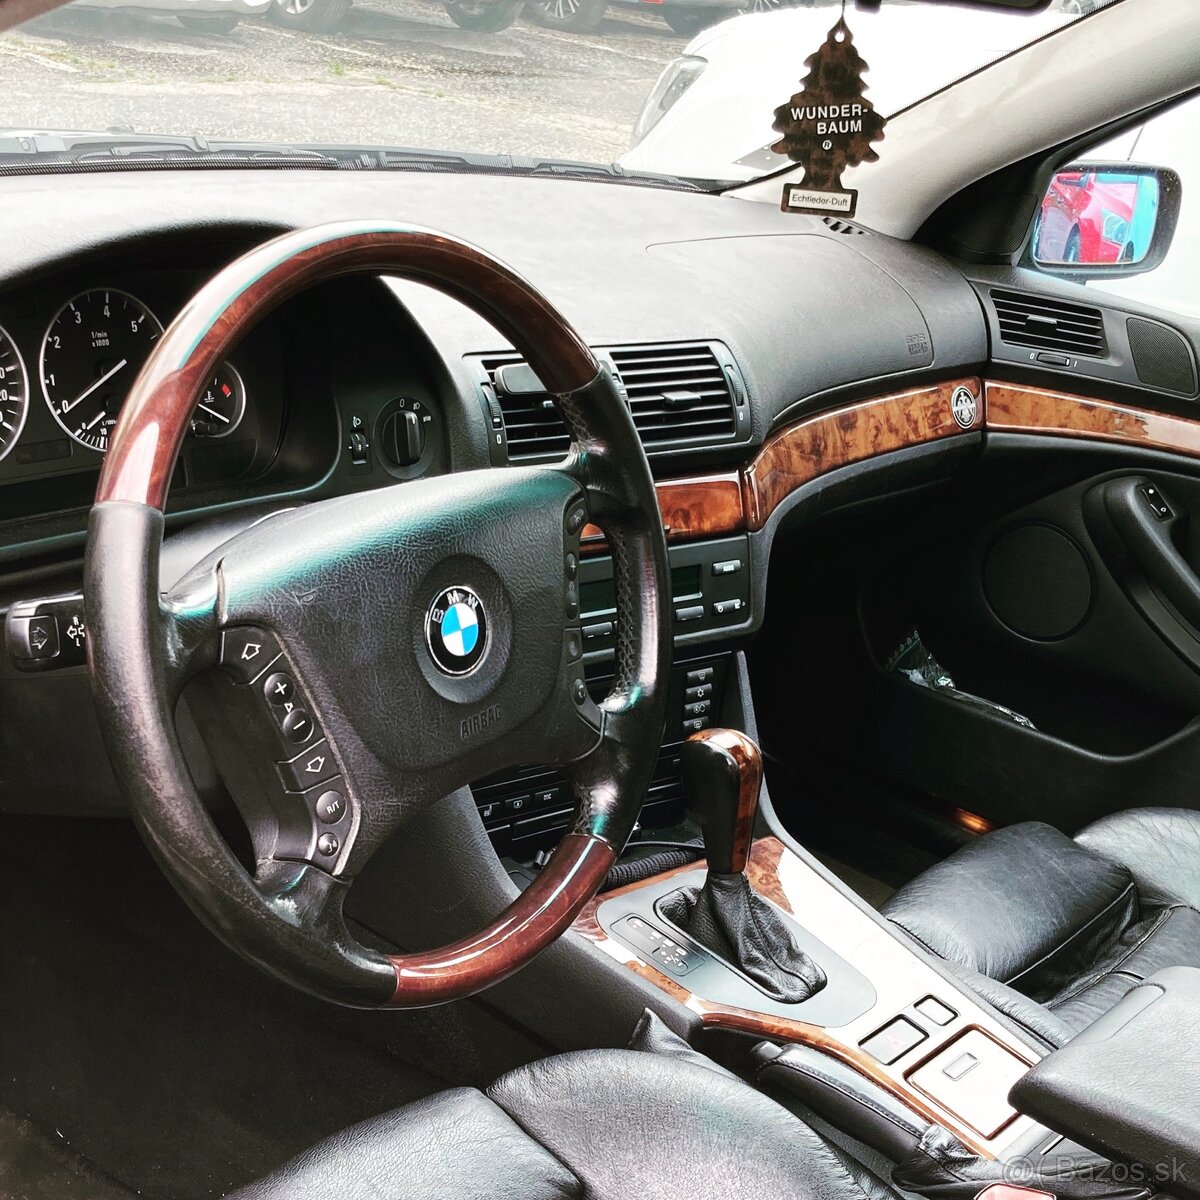 BMW E39 drevodekor